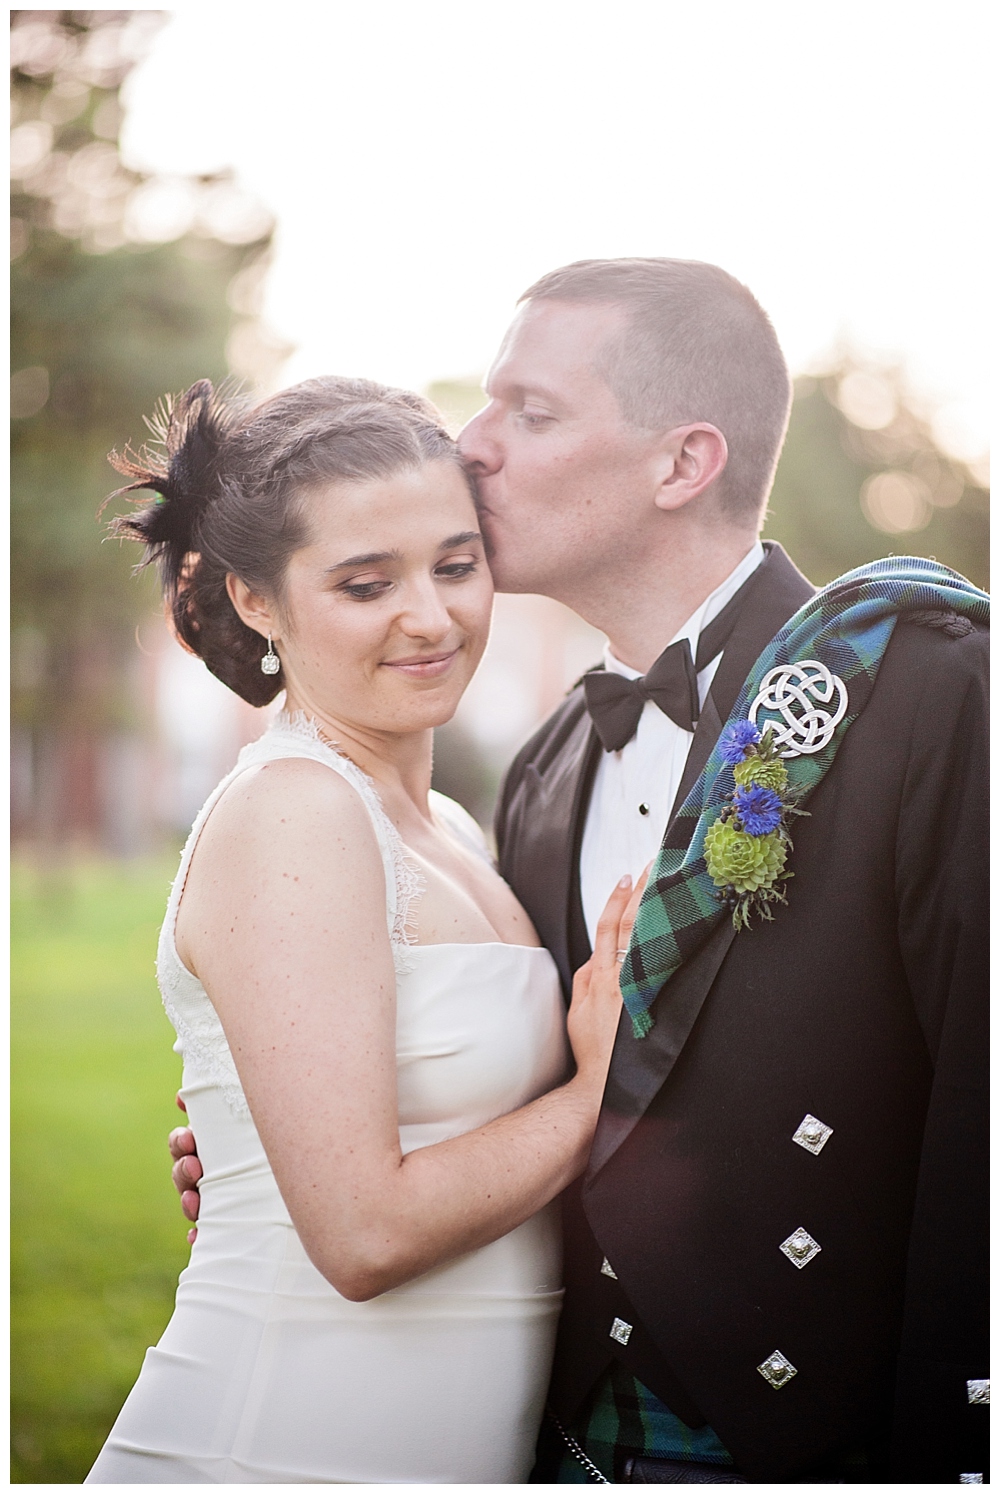 bride and groom in kilt portrait backlight Virginia Theological Seminary